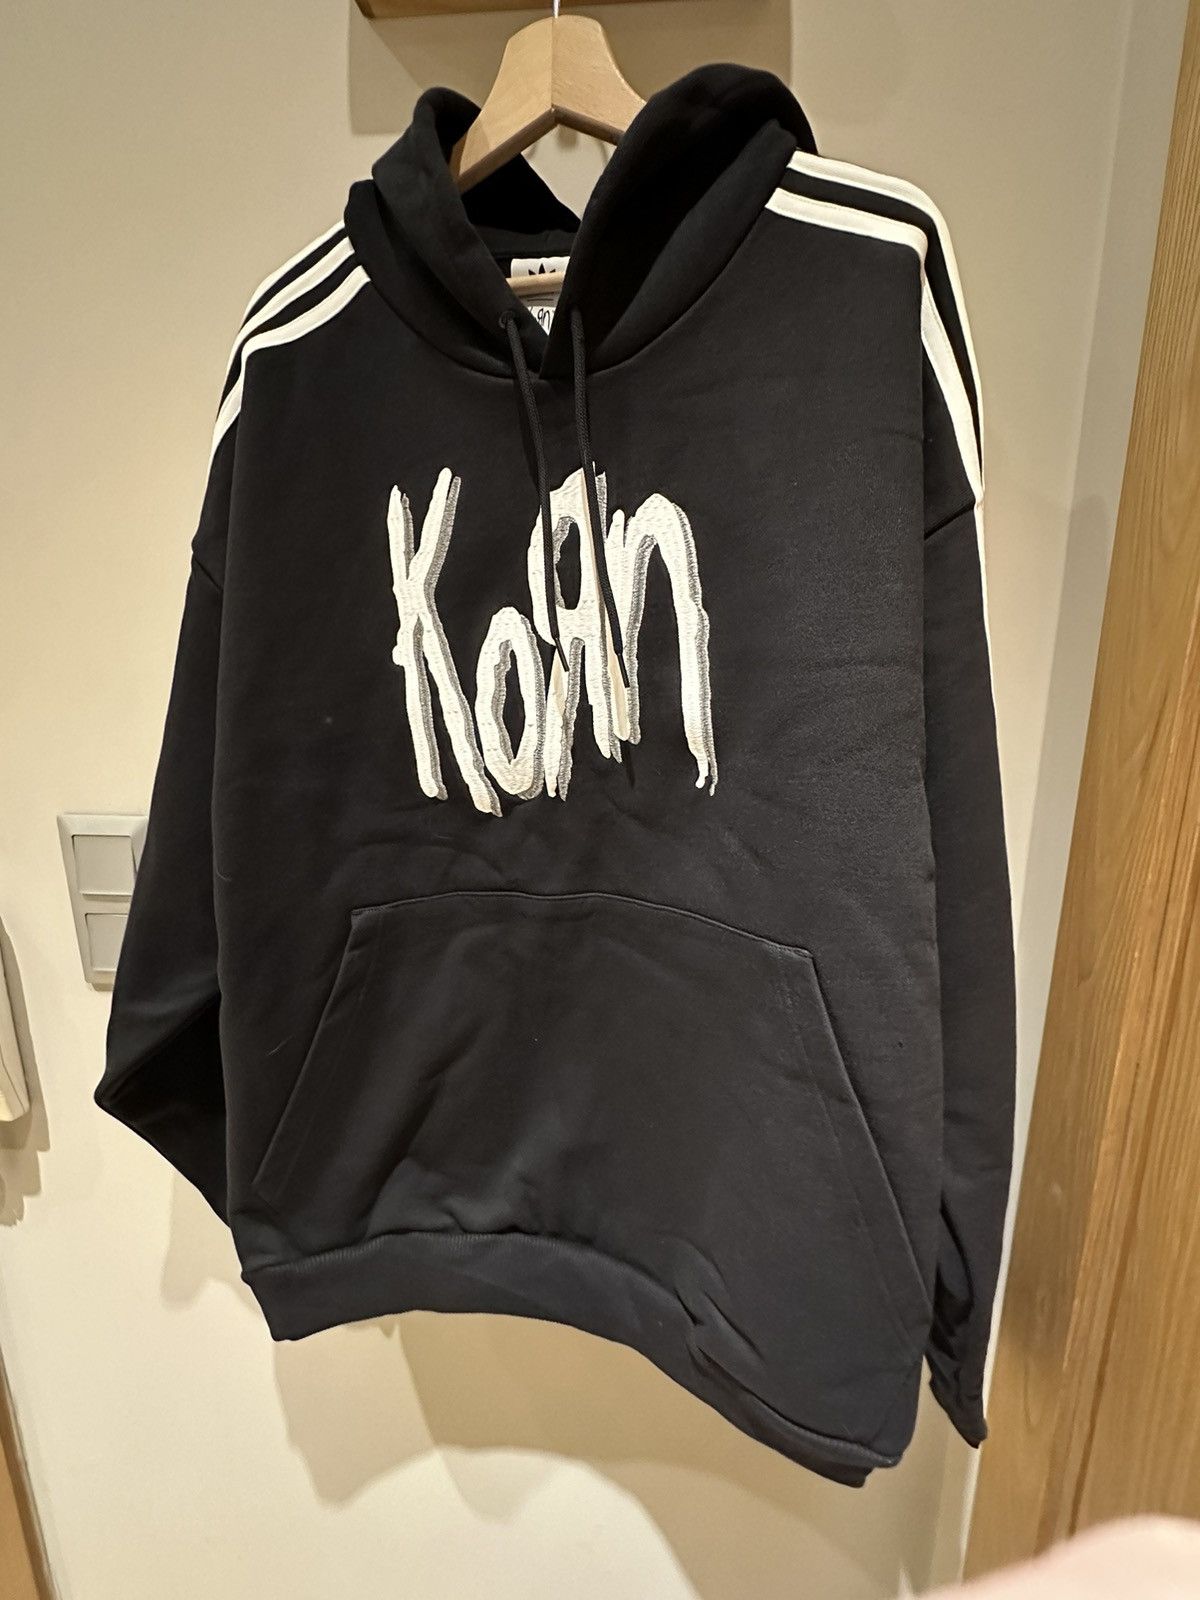 Adidas Korn x Adidas hoodie | Grailed